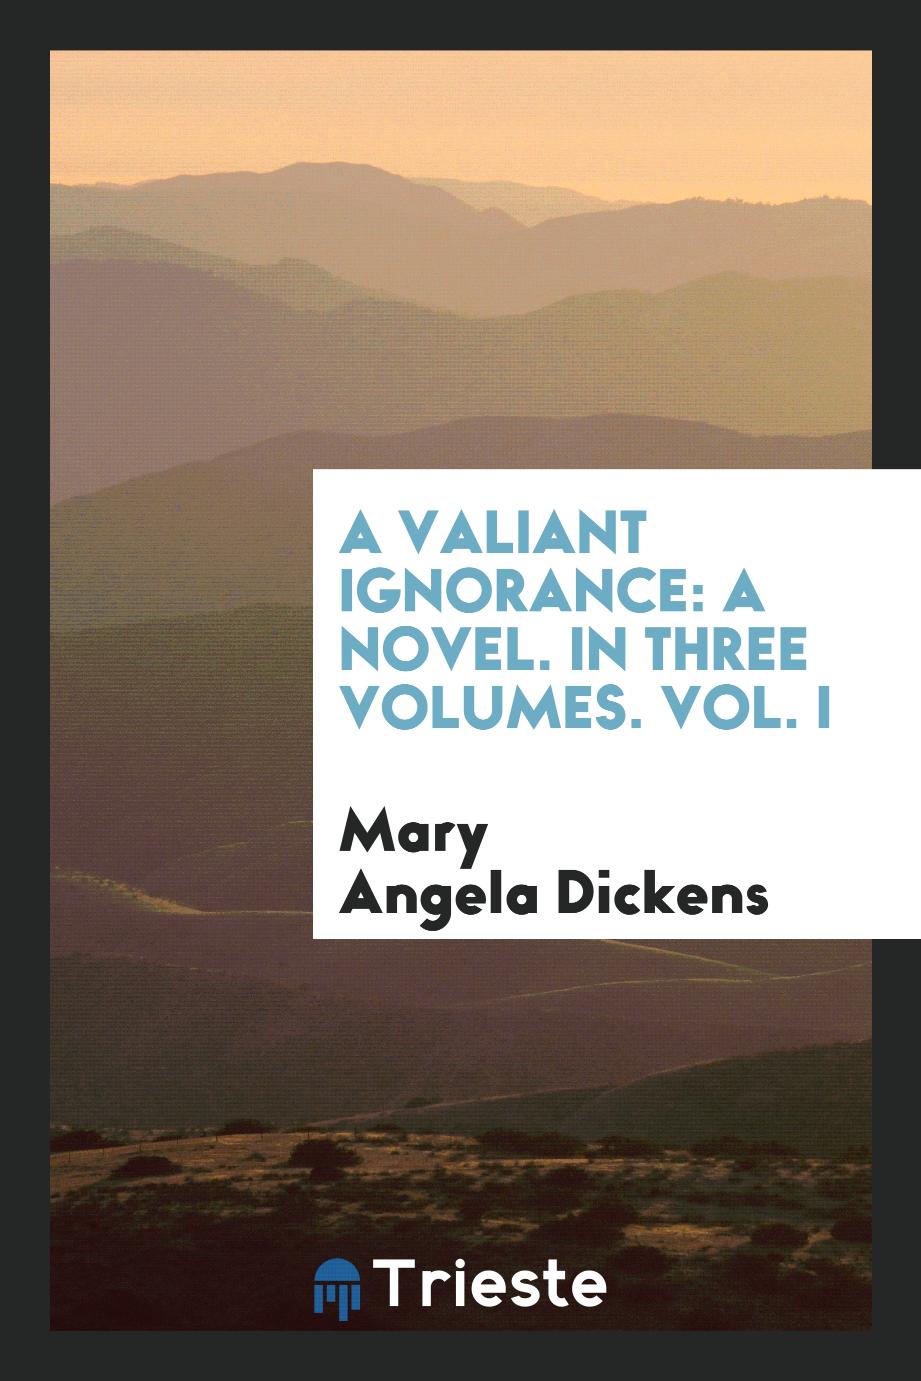 A Valiant Ignorance: A Novel. In Three Volumes. Vol. I